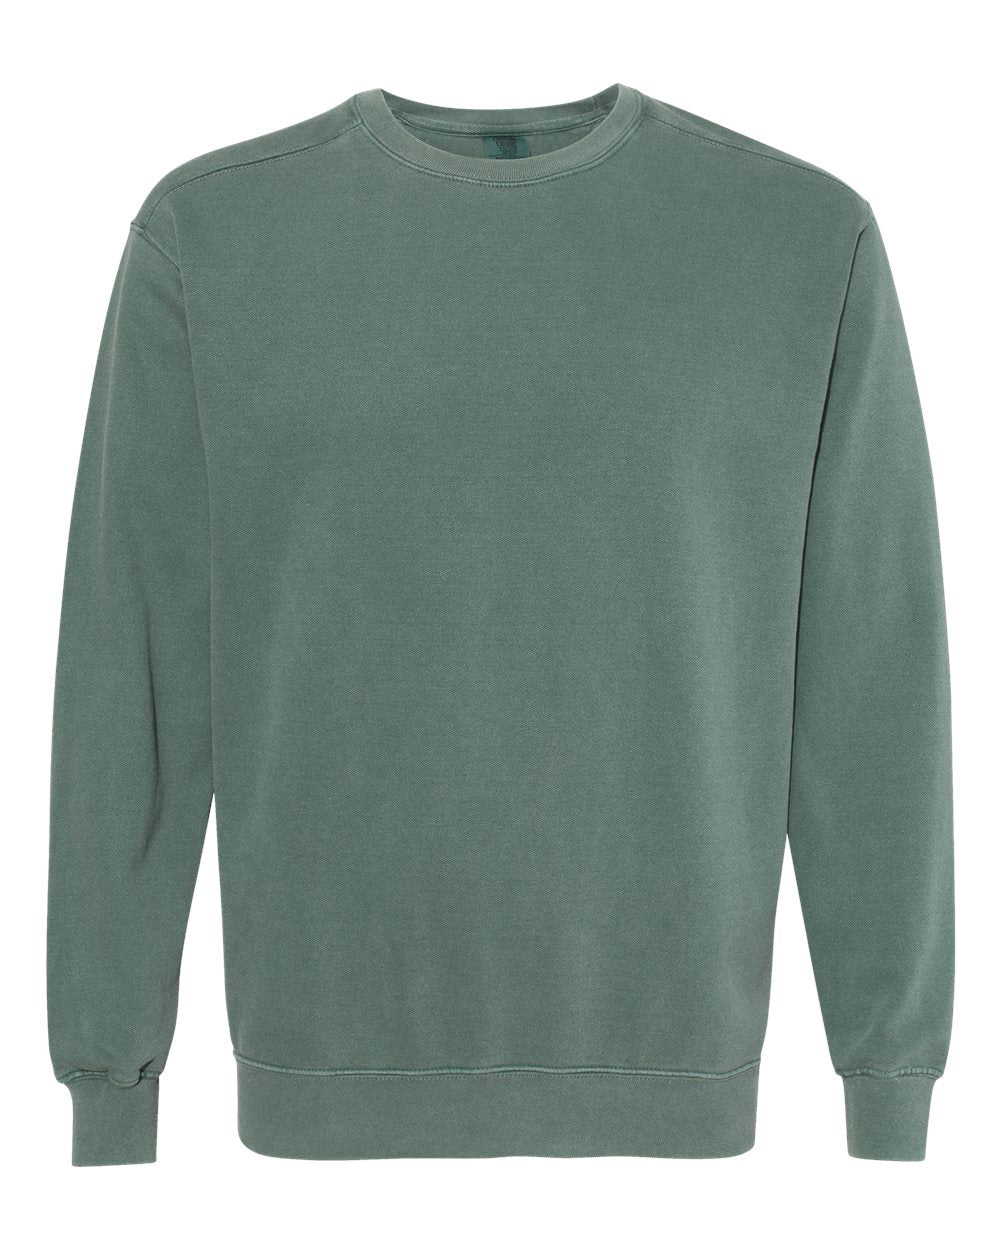 Comfort Colors Garment-Dyed Crewneck Sweatshirt (1566) in Blue Spruce